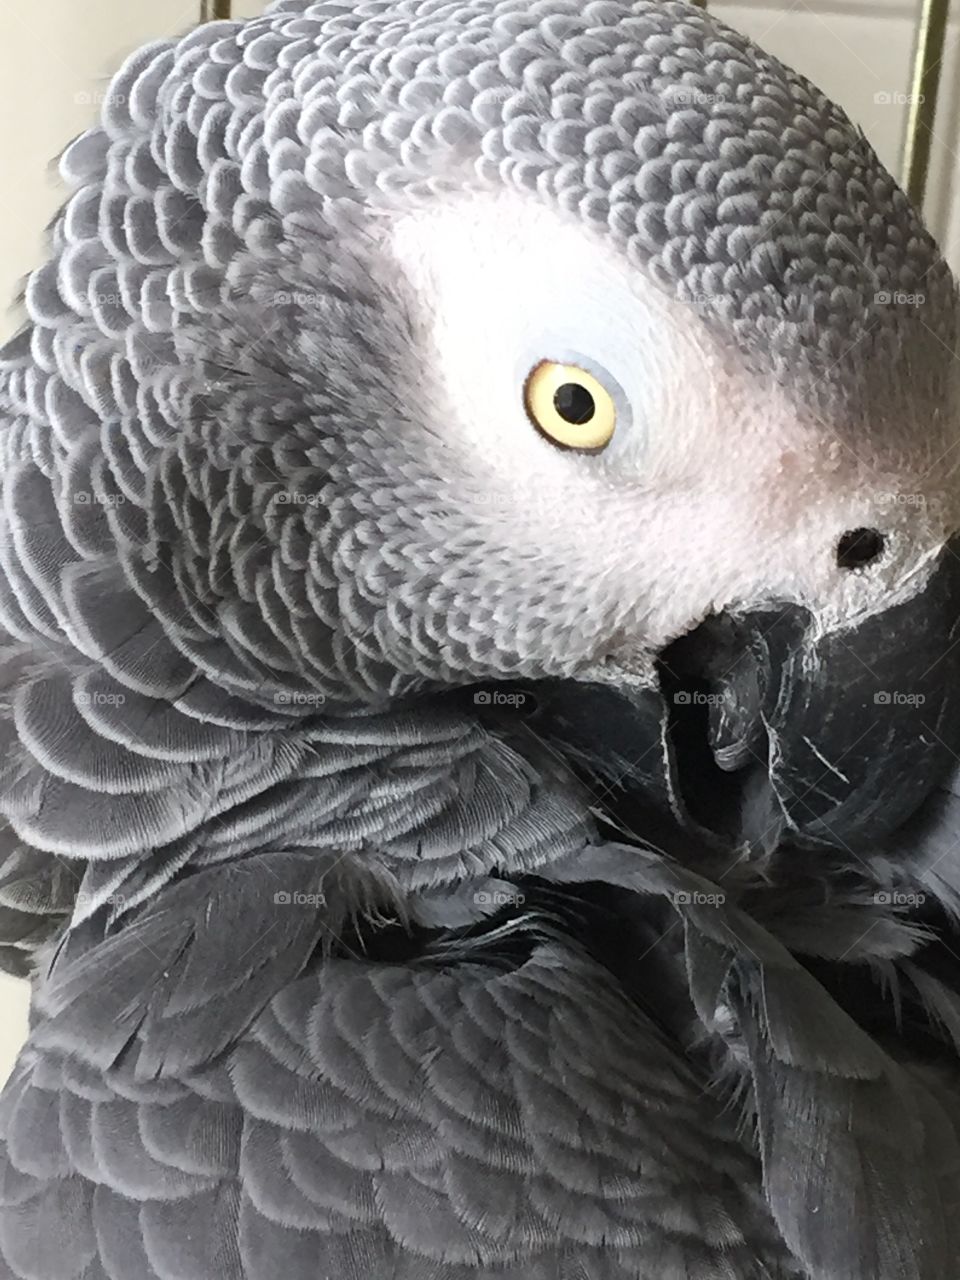 My Parrot !!!